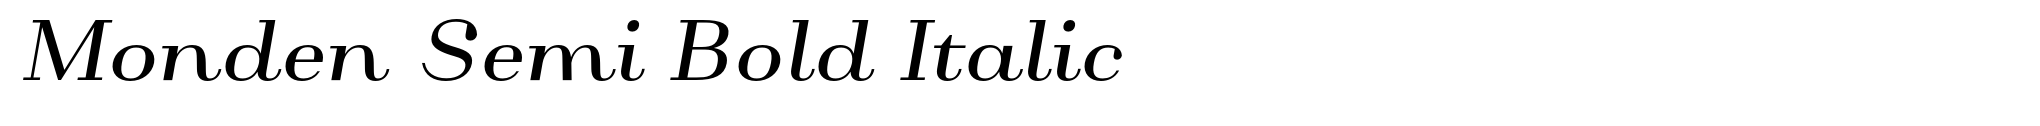 Monden Semi Bold Italic image